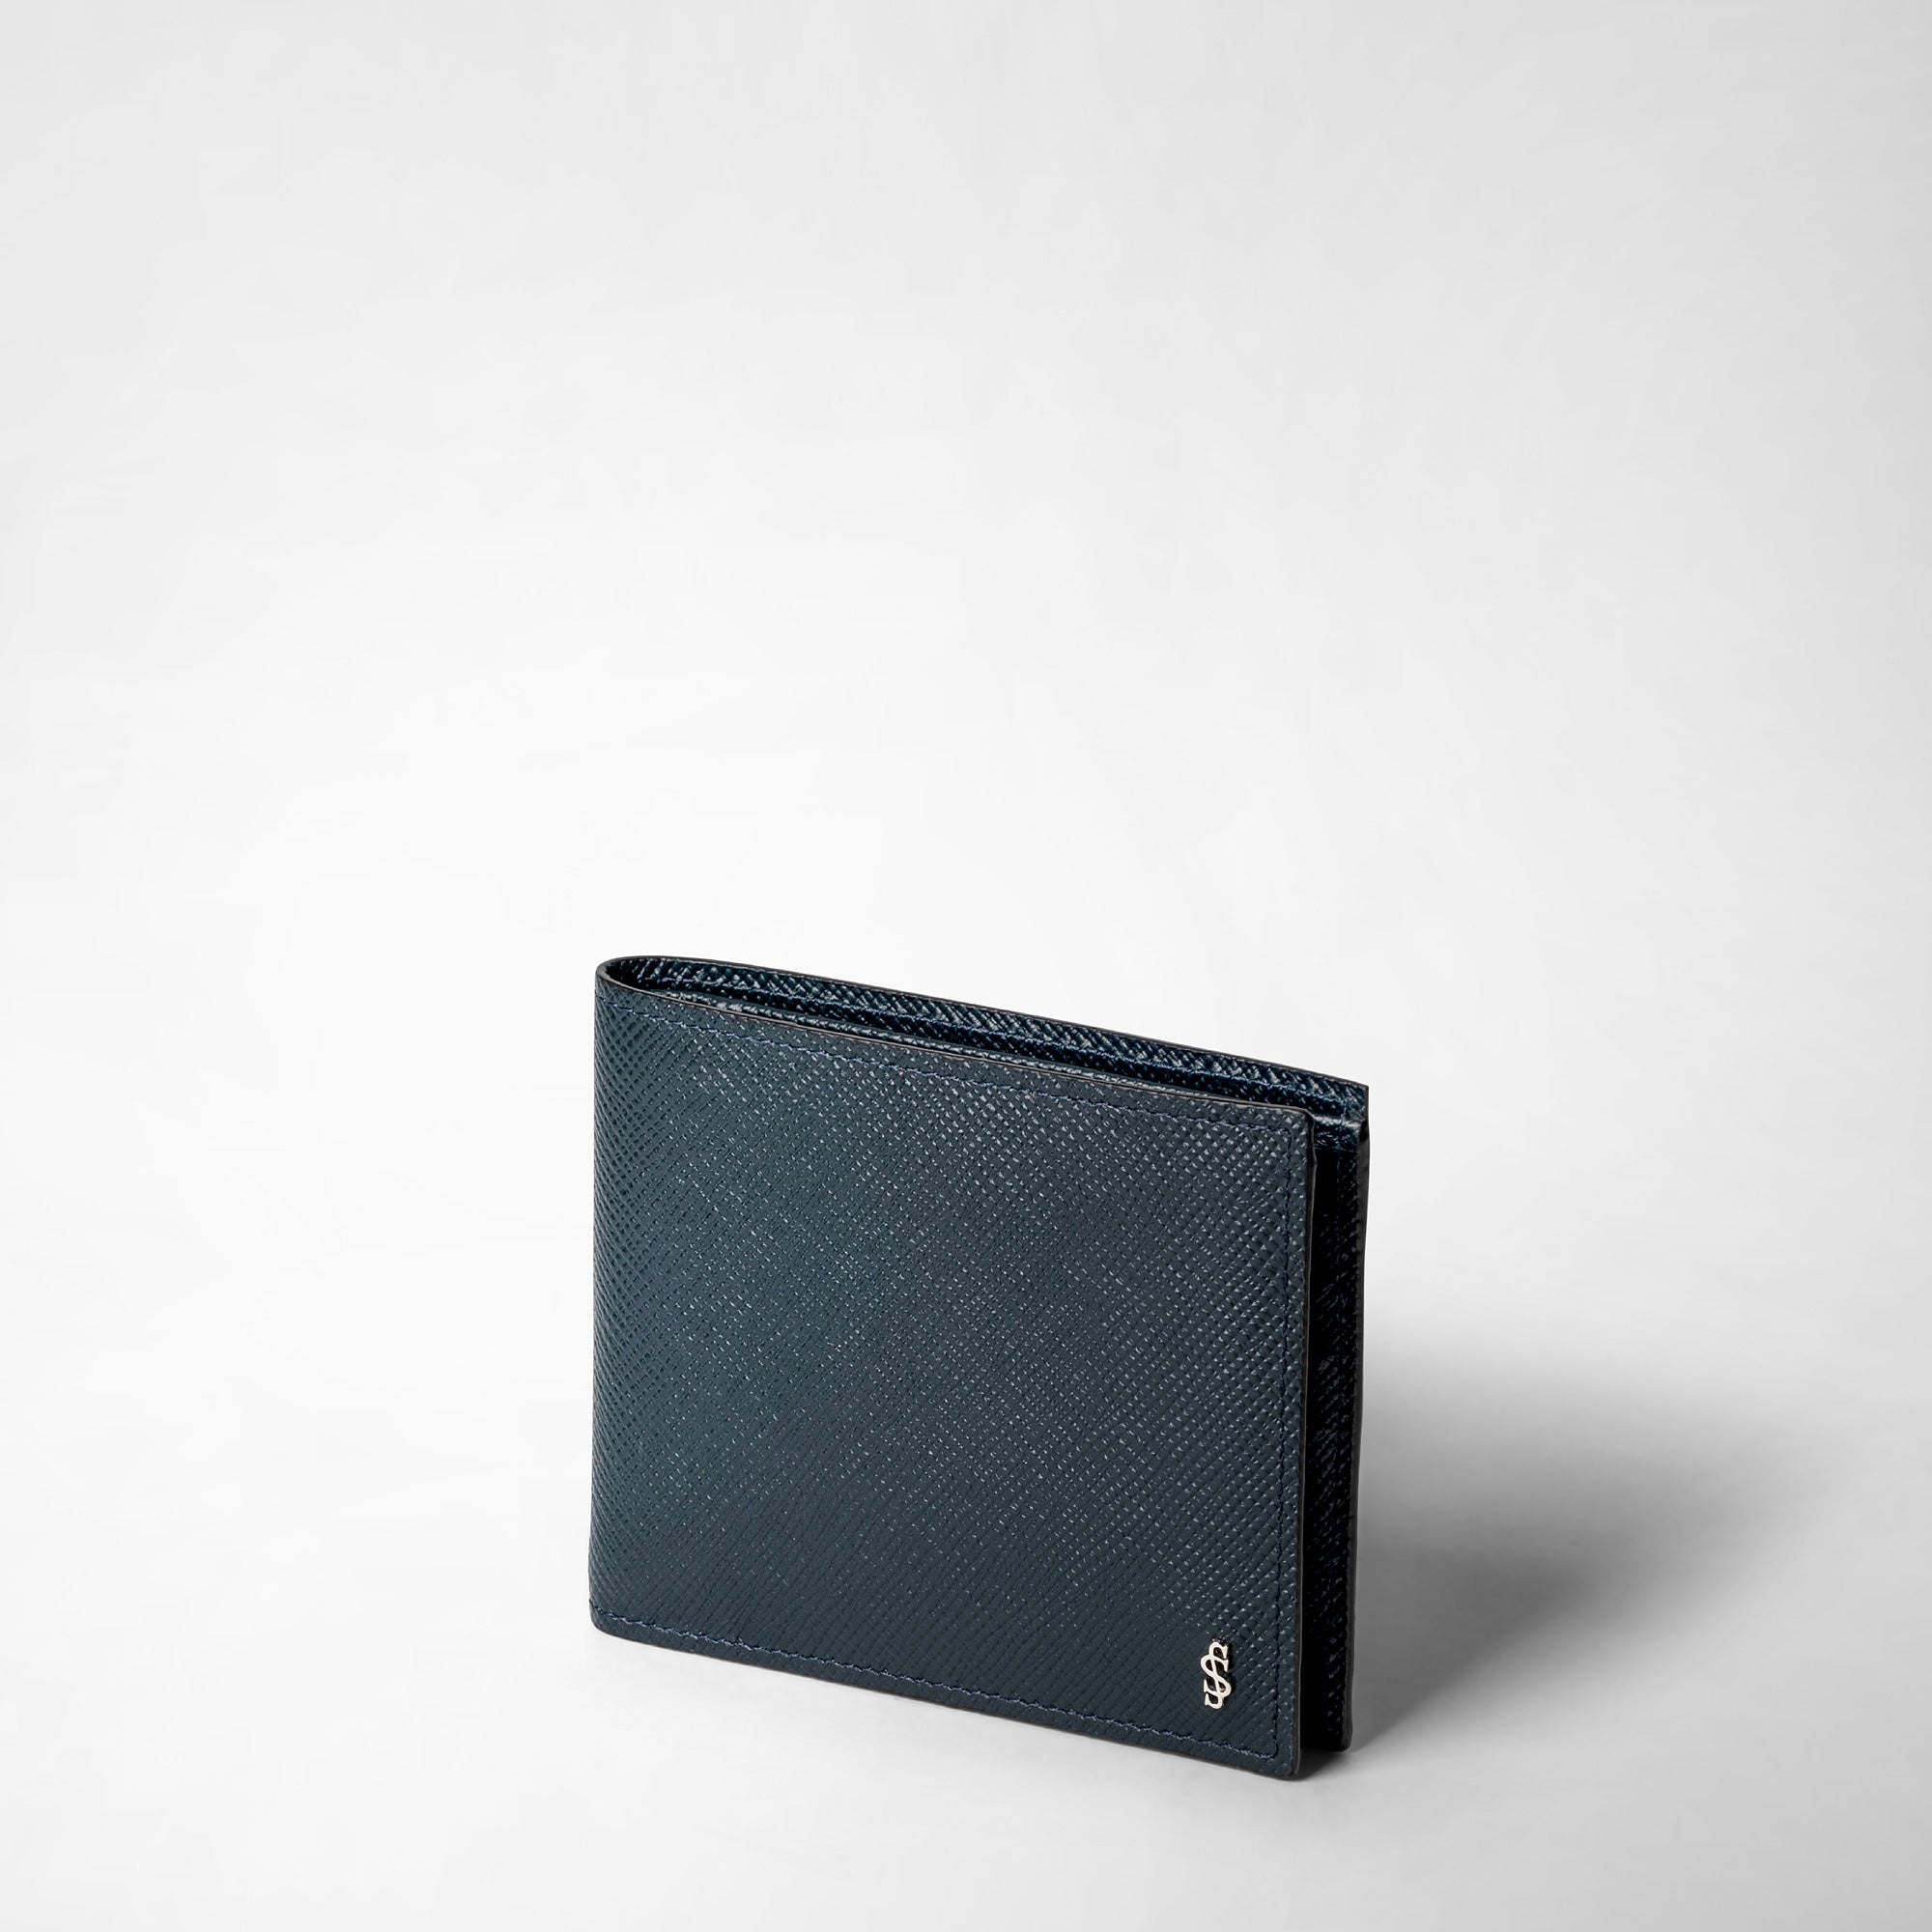 Serafino 8 Card Italian Leather Wallet Brown 